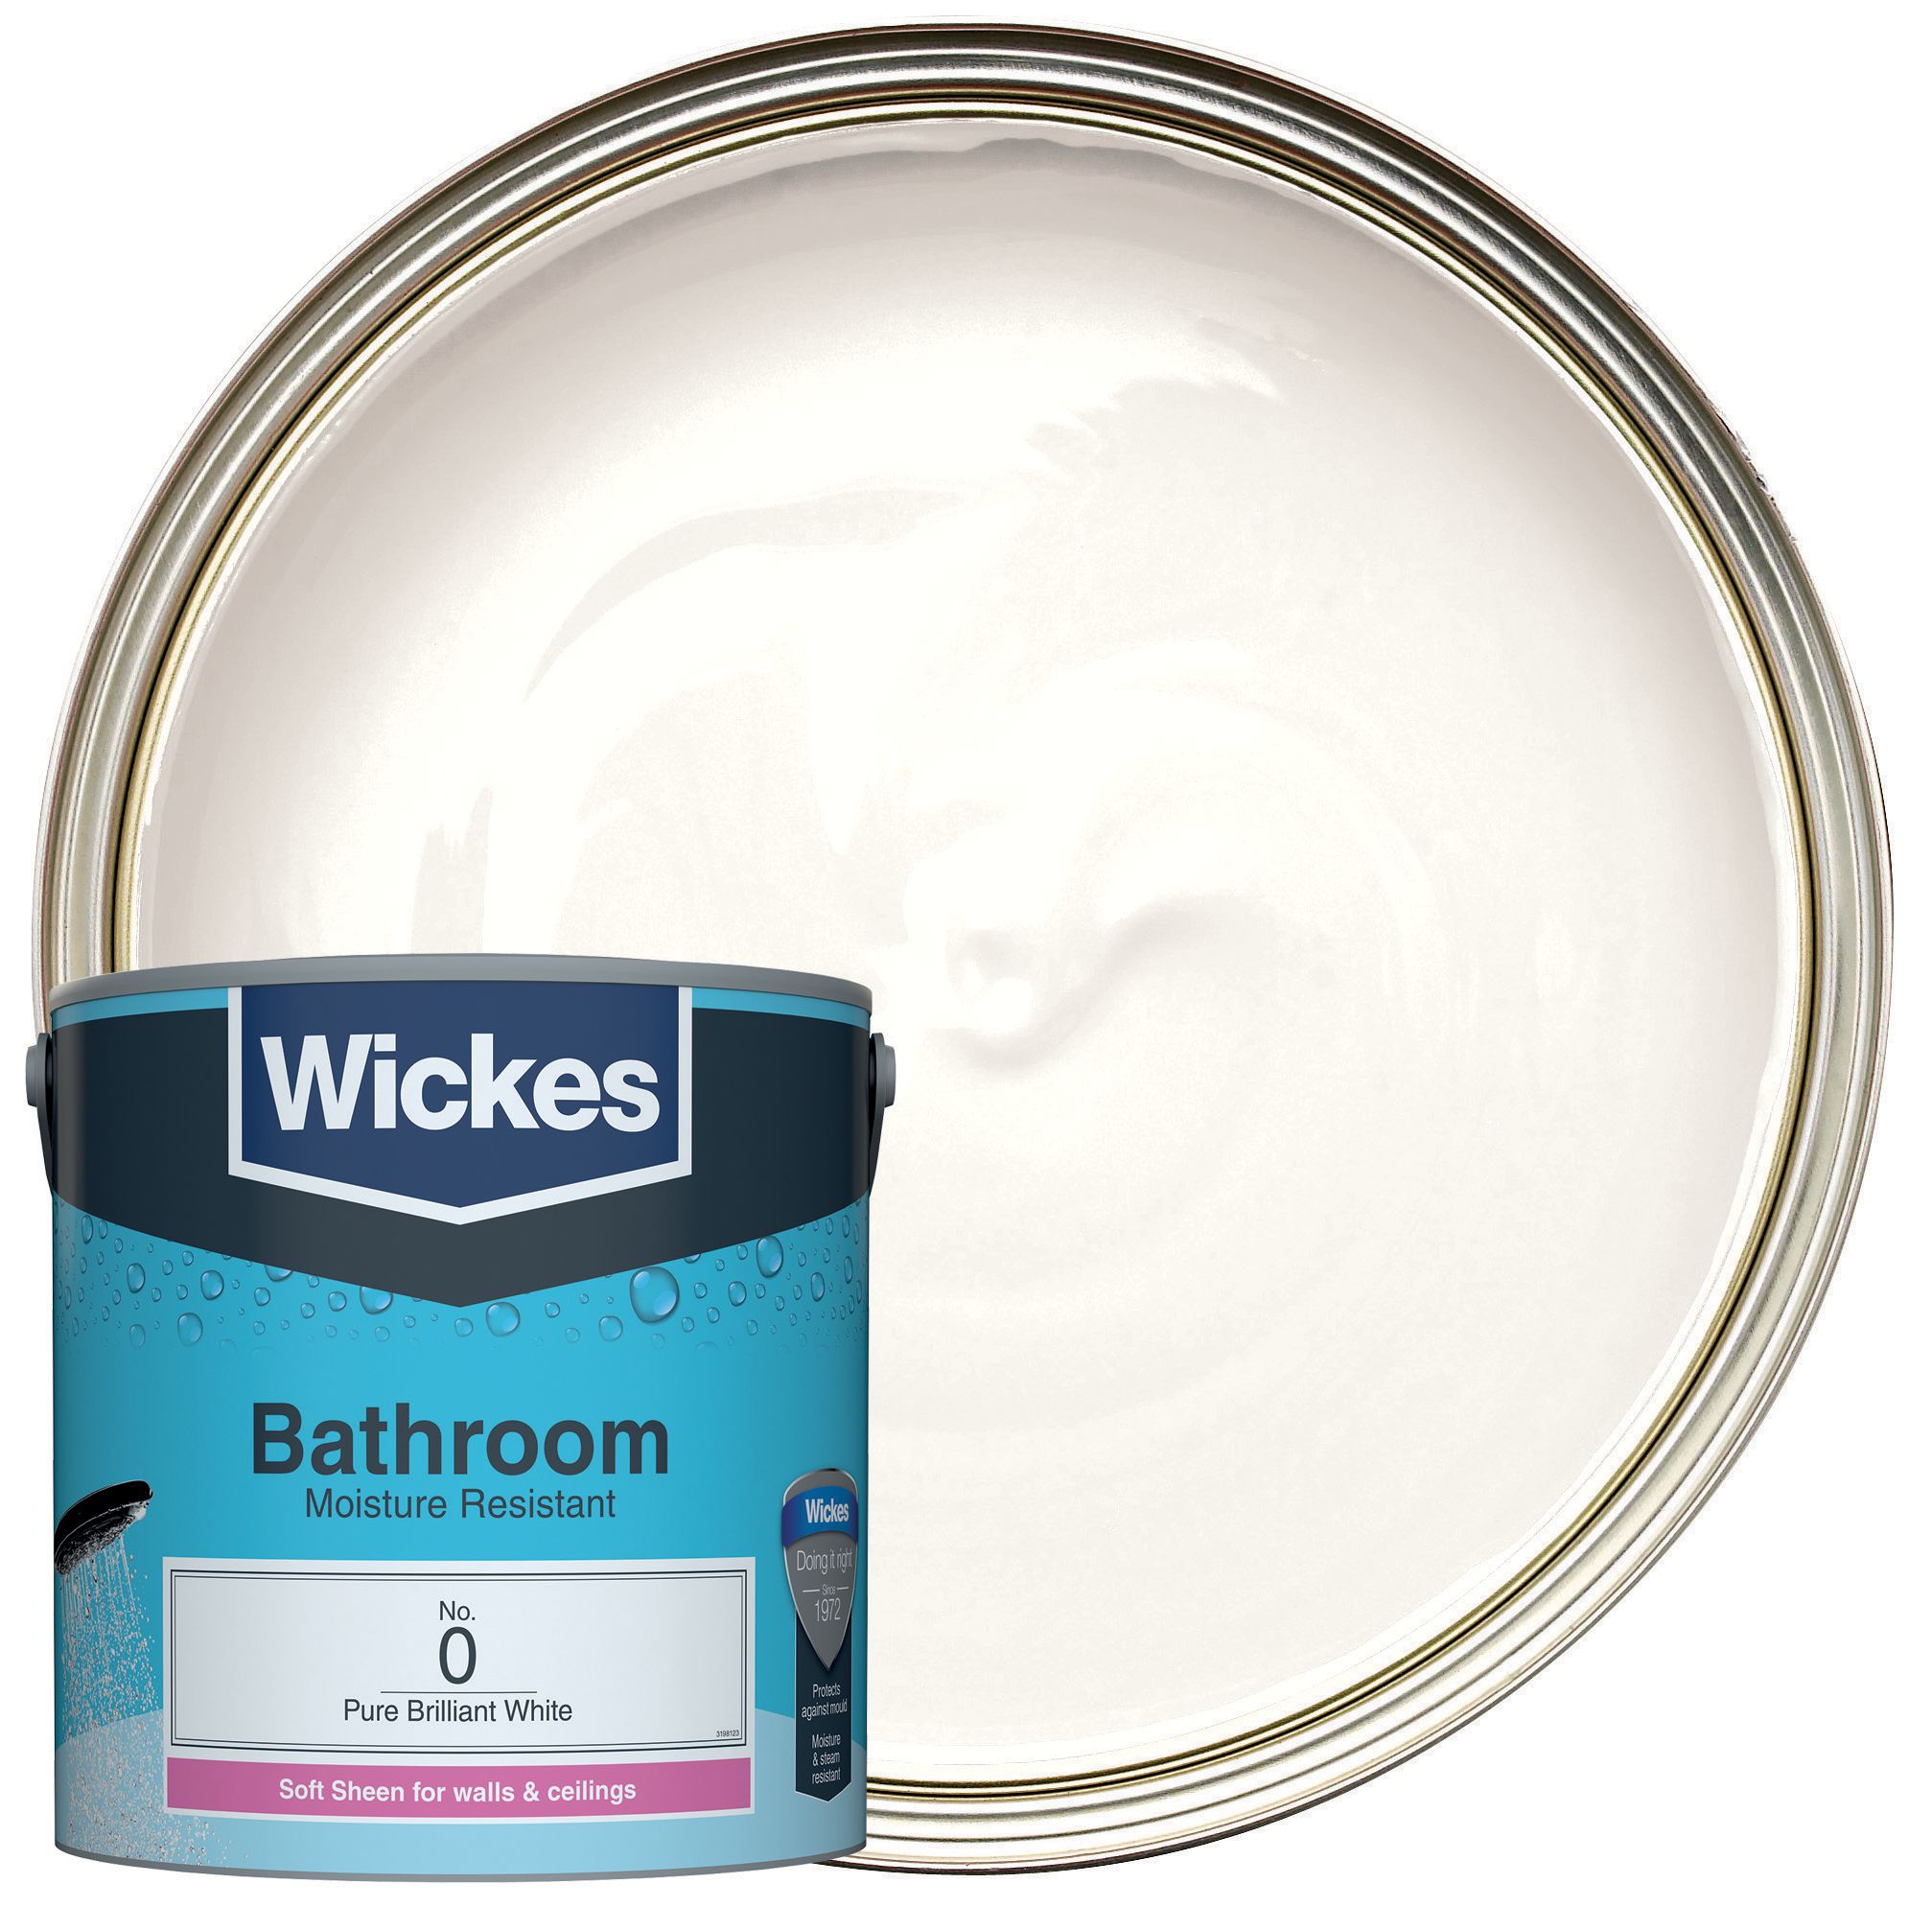 Image of Wickes Bathroom Soft Sheen Emulsion Paint - Pure Brilliant White No.0 - 2.5L